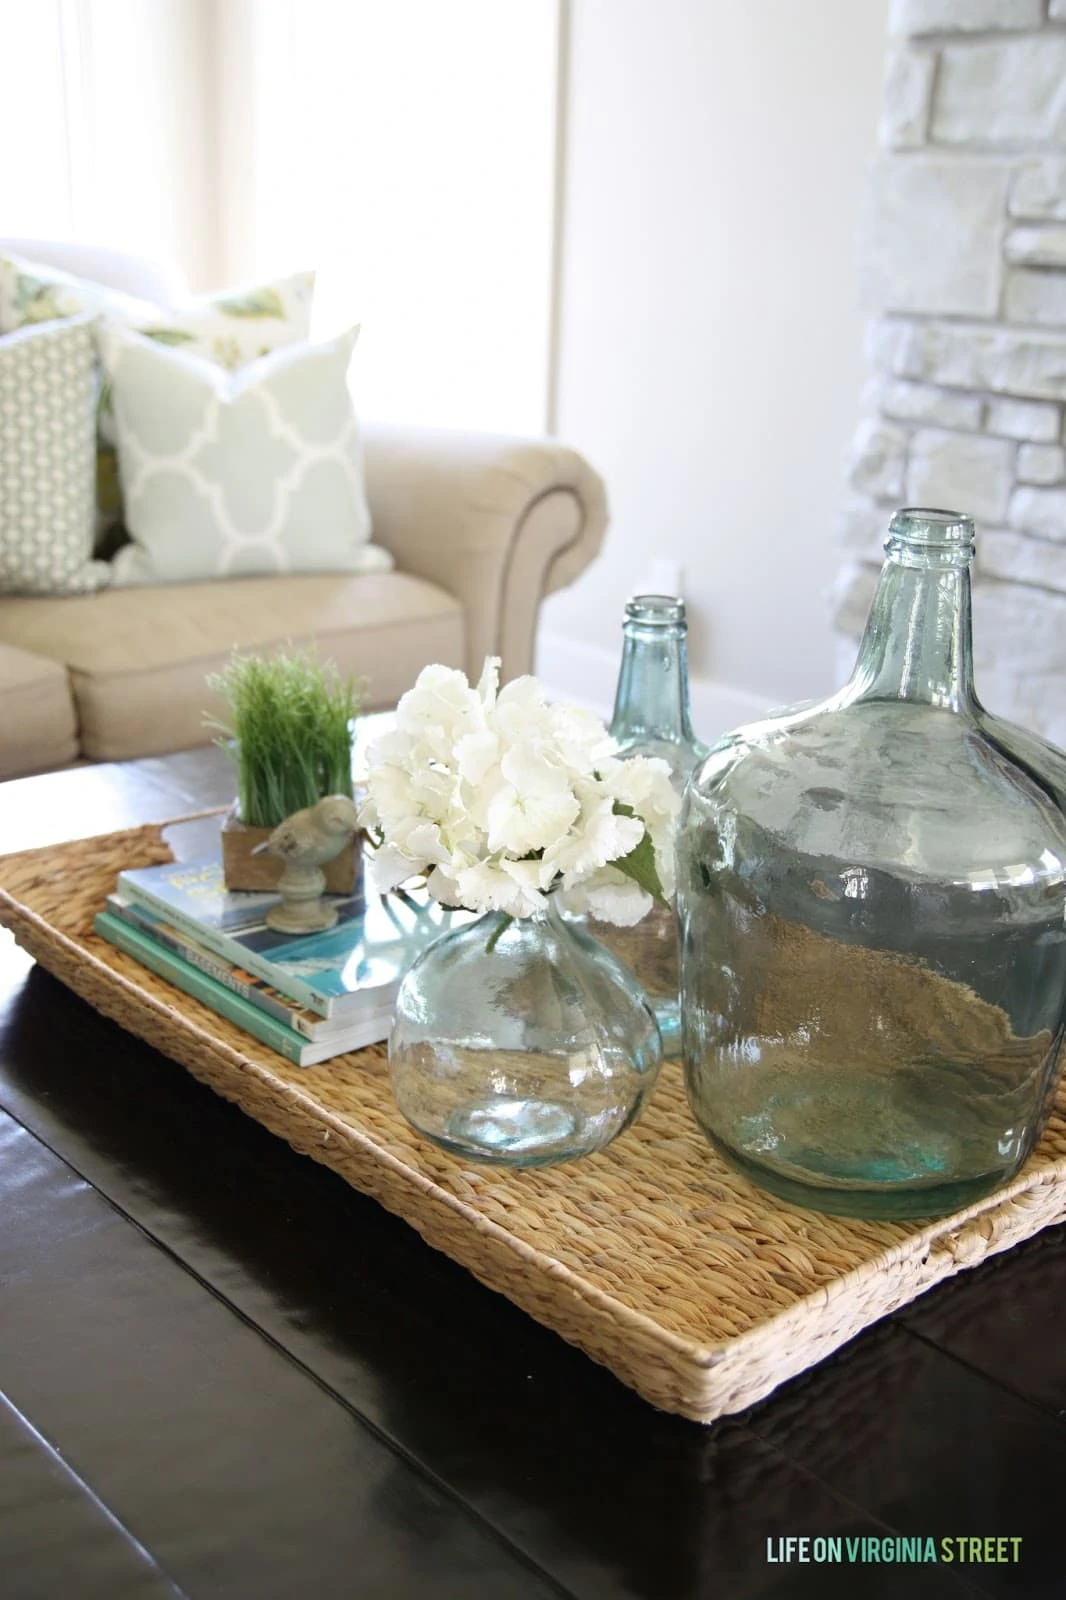 Summer decor with seagrass basket, aqua bottles and white hydrangeas